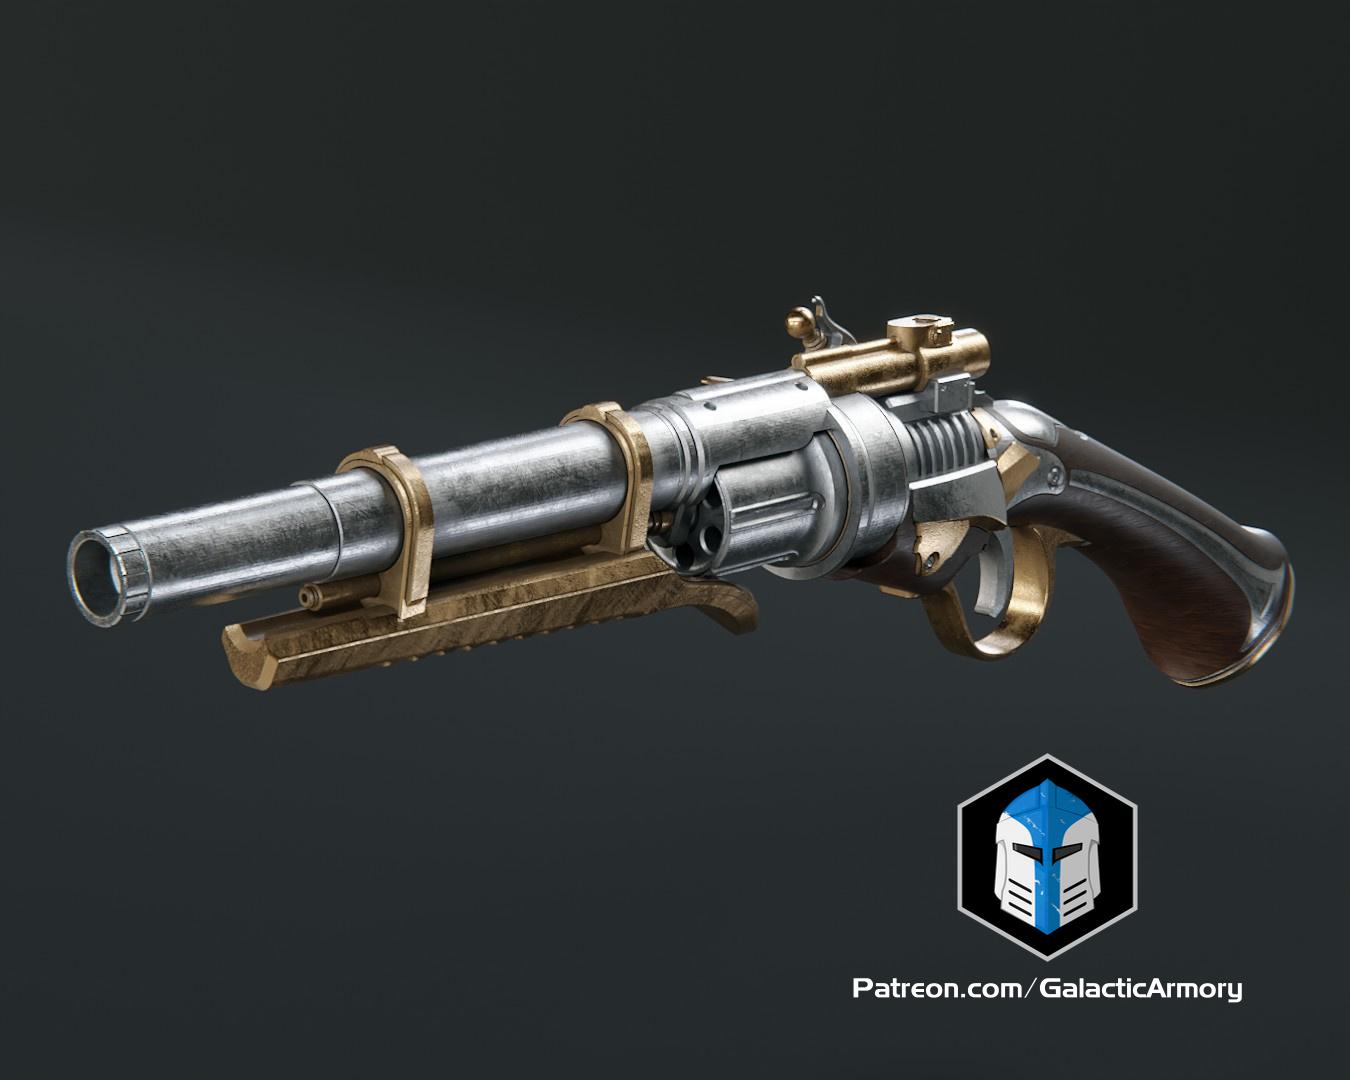 [New Files!] A custom Star Wars Flintlock Blaster has been added to the Specialist rewards!